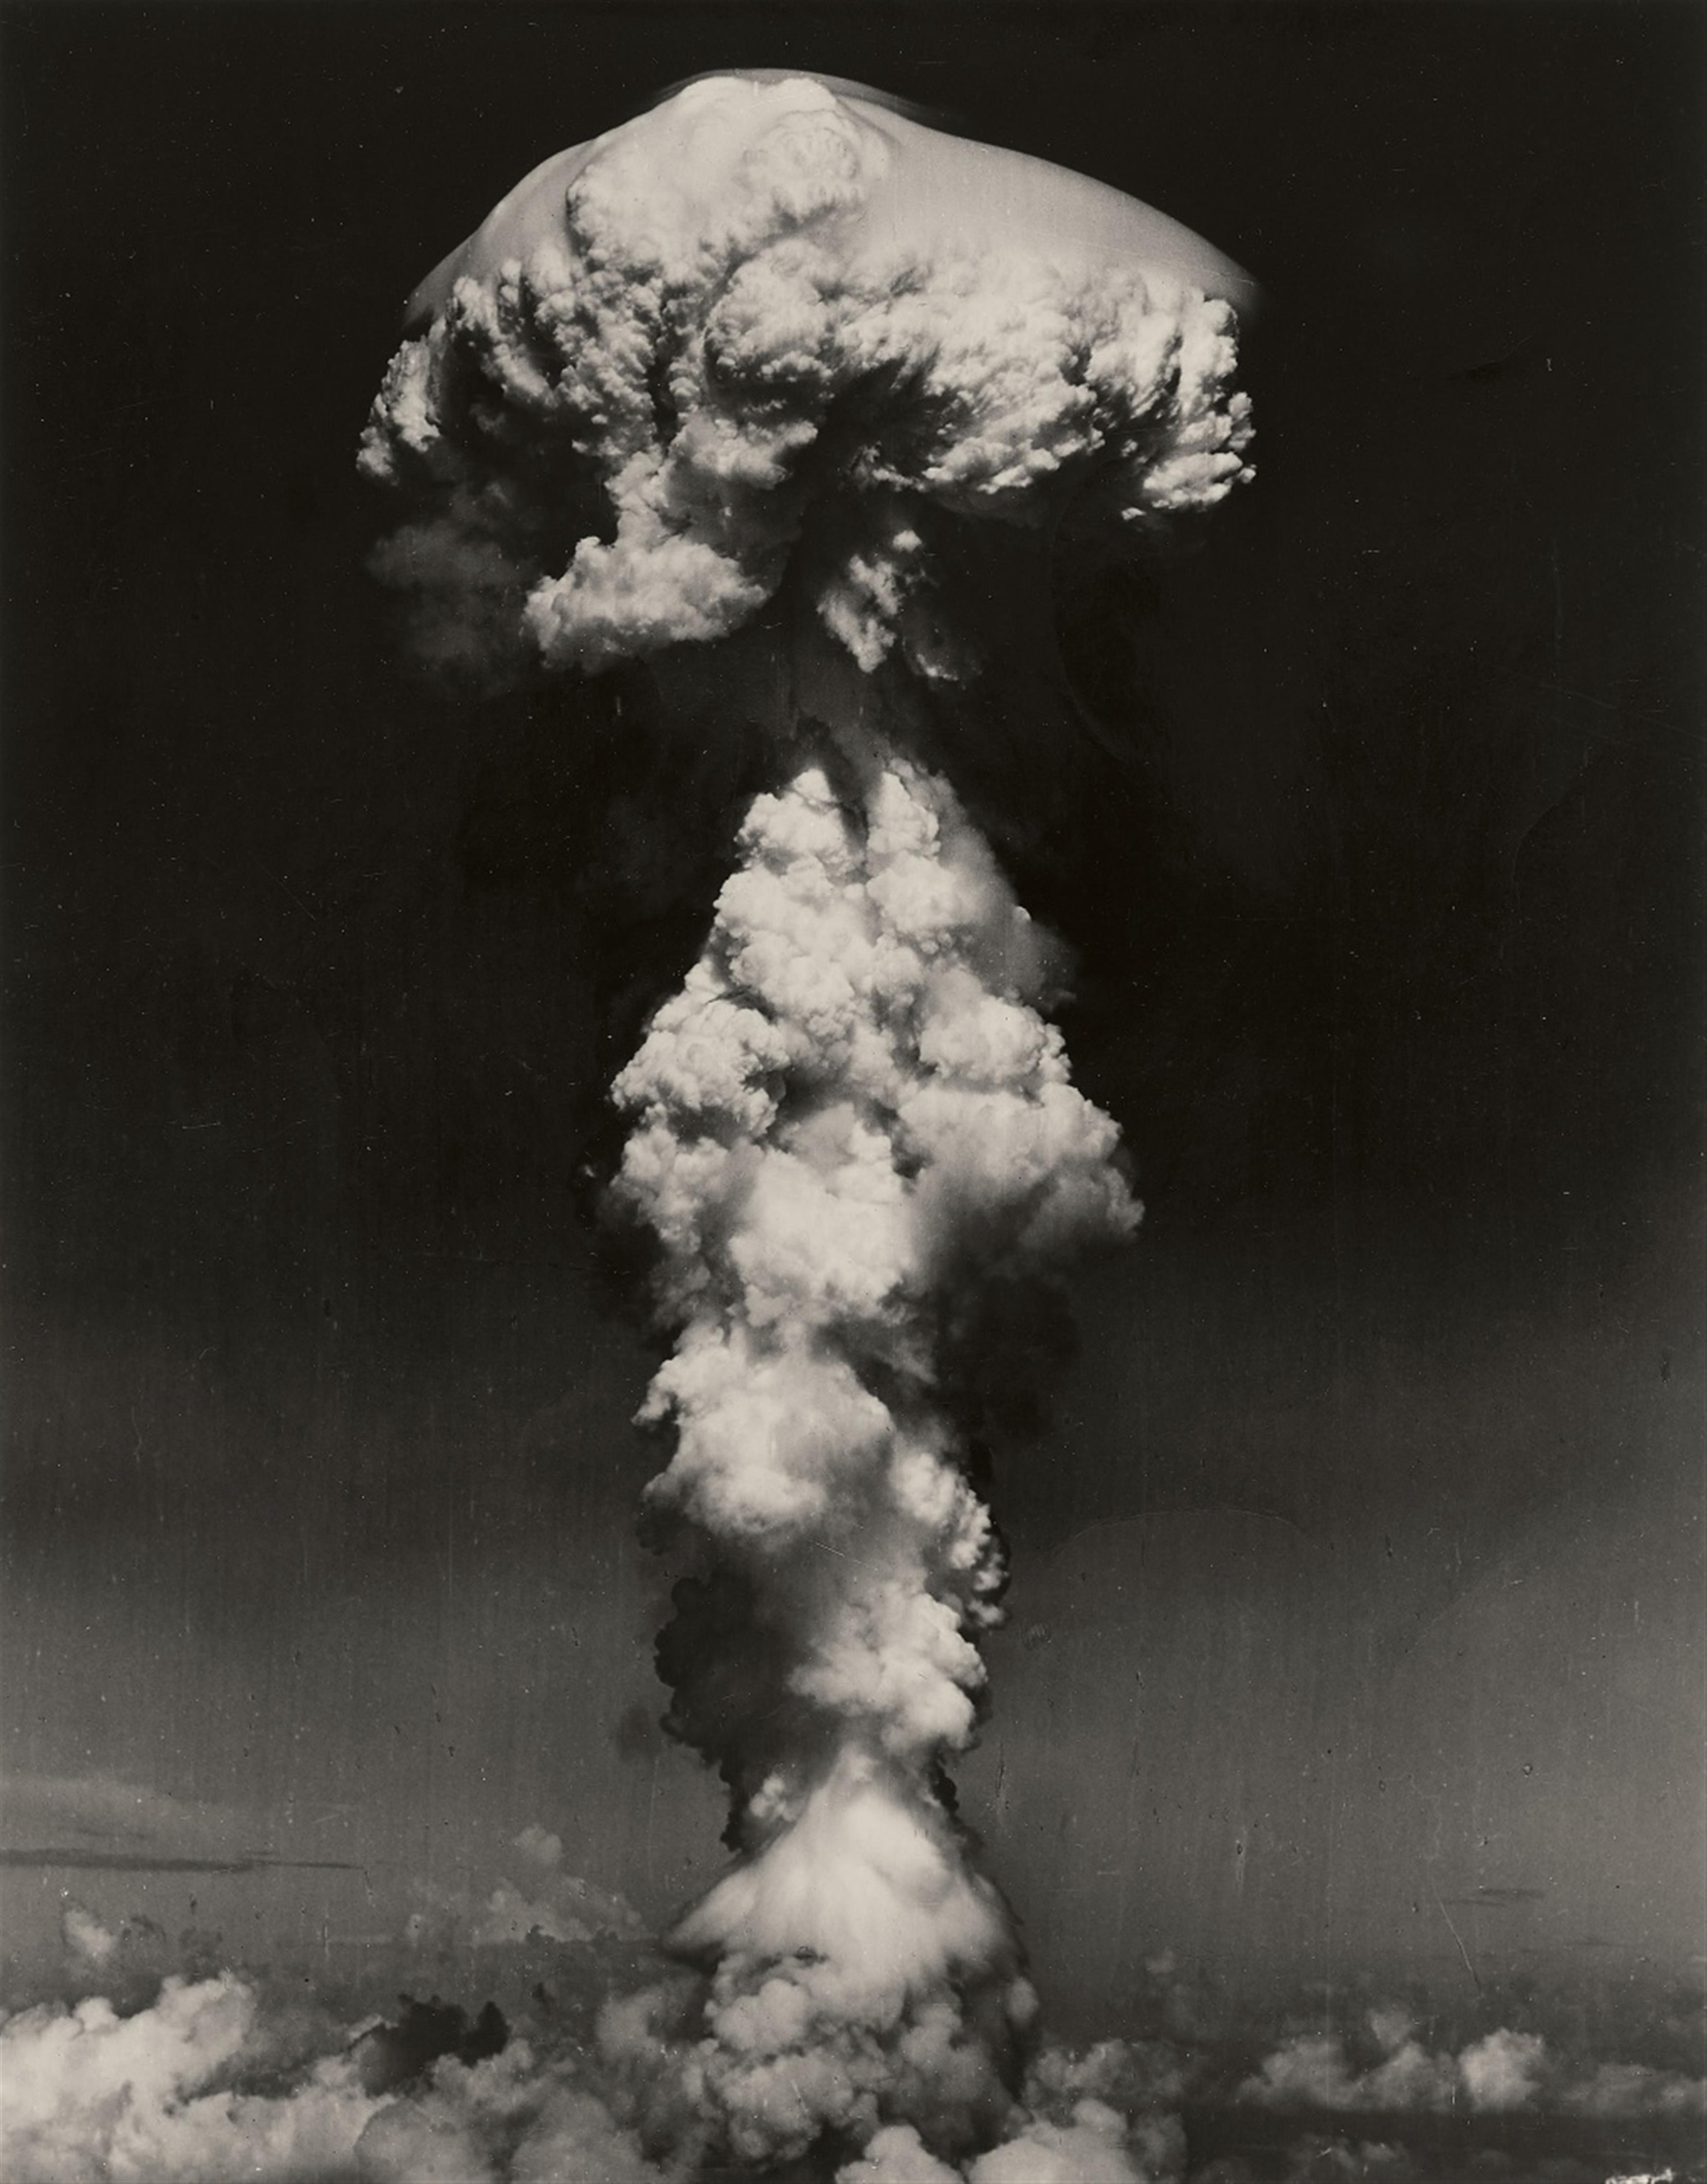 Joint Army Task Force One Photo - "Operation Crossroads" - Aufnahmen der Atombomben-Tests auf dem Bikini-Atoll - image-5